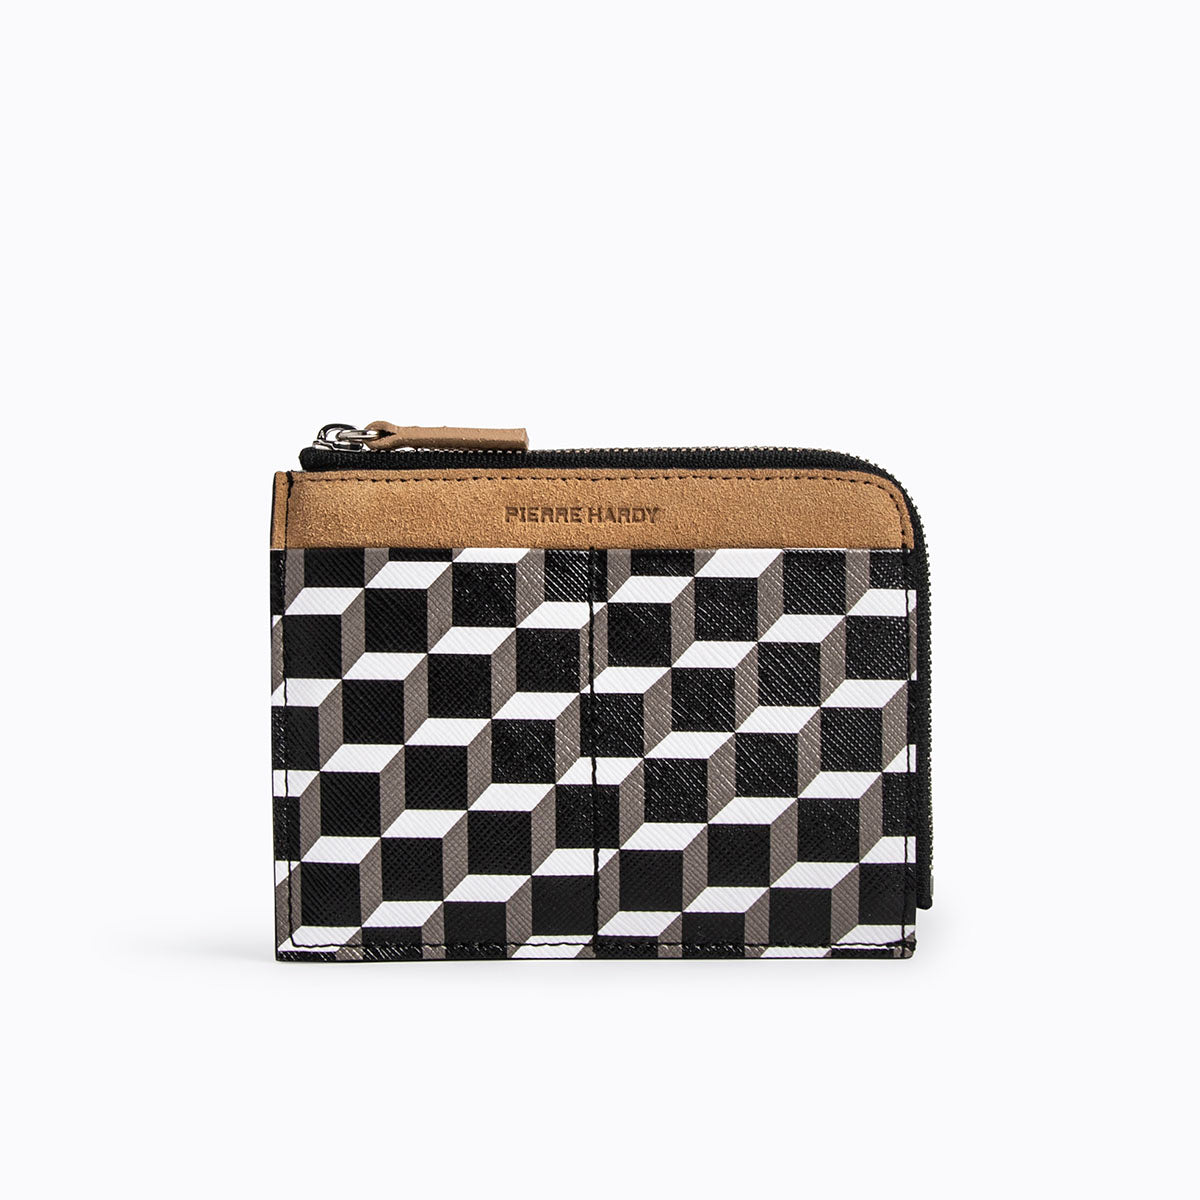 Louis Vuitton Wallet in ebony checkerboard coated canva…